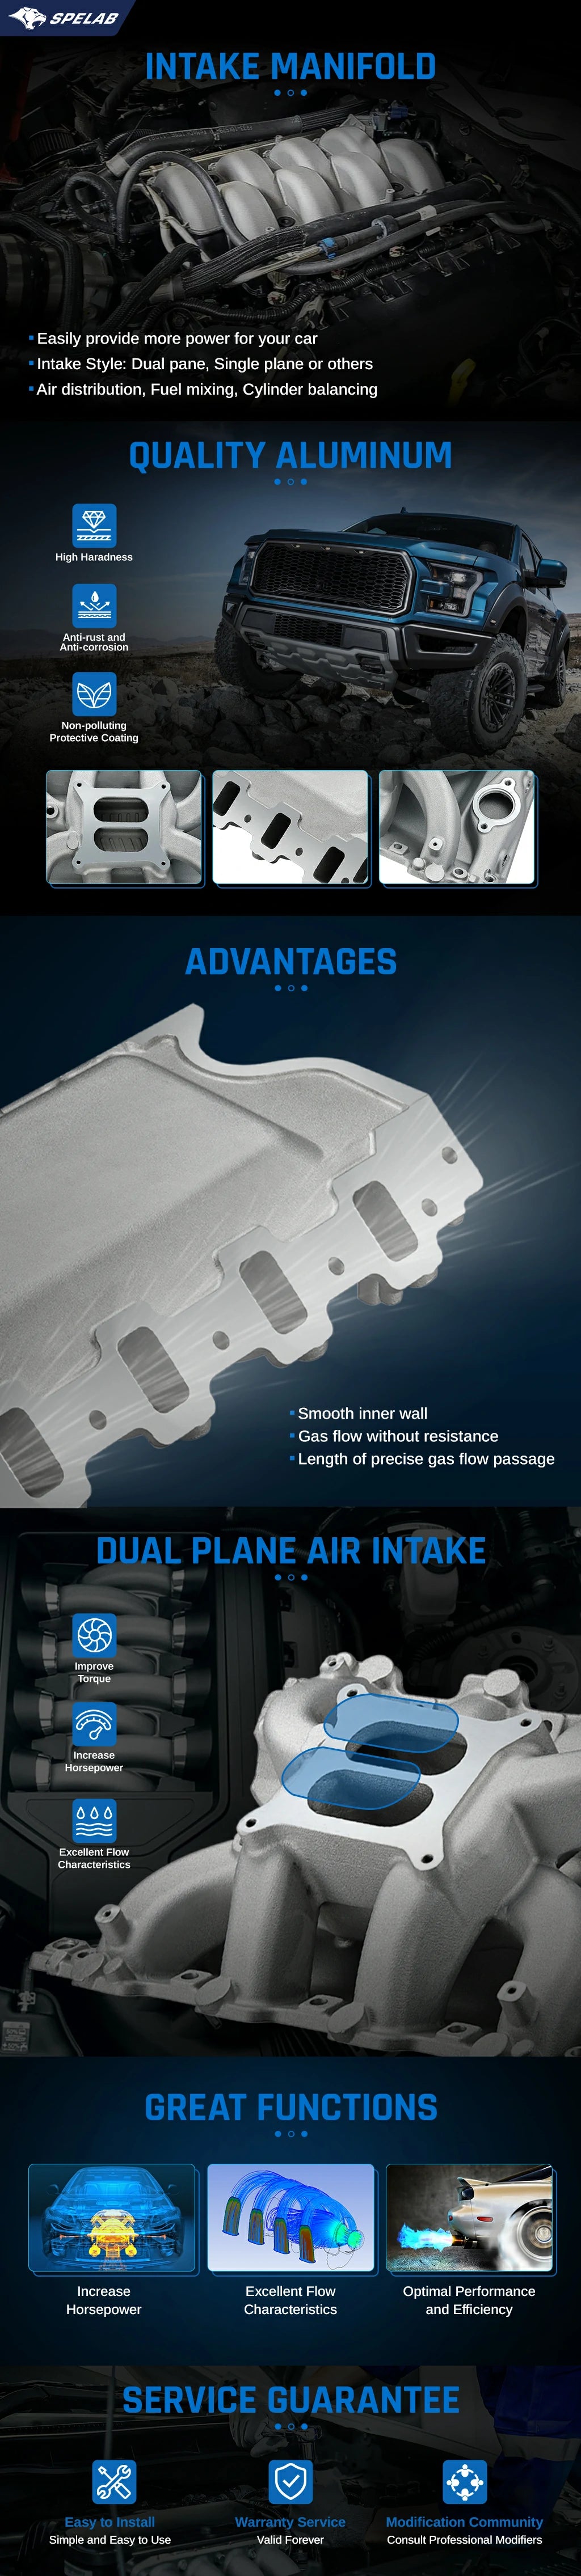 Intake Manifold Ford Small Block Carbureted Dual Plane | SPELAB-27